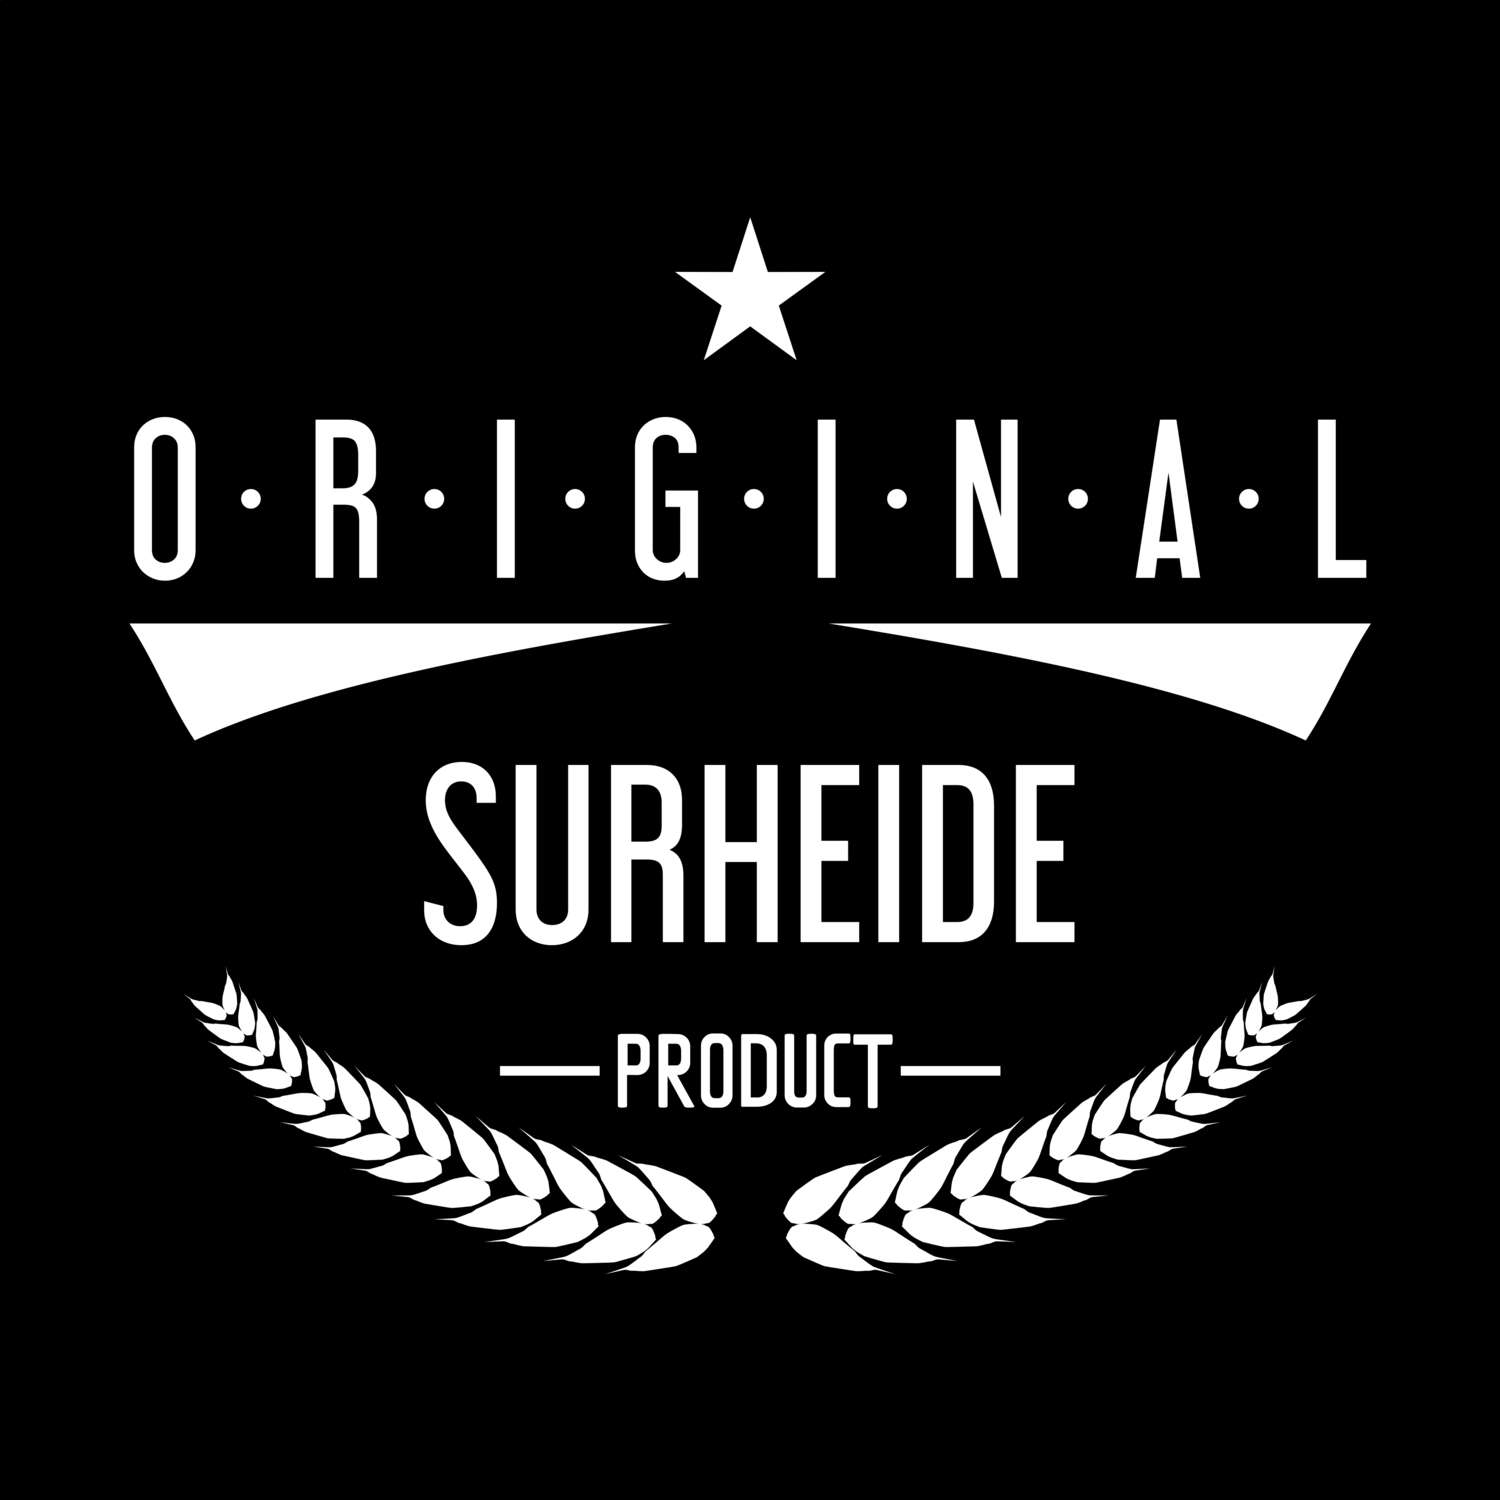 Surheide T-Shirt »Original Product«